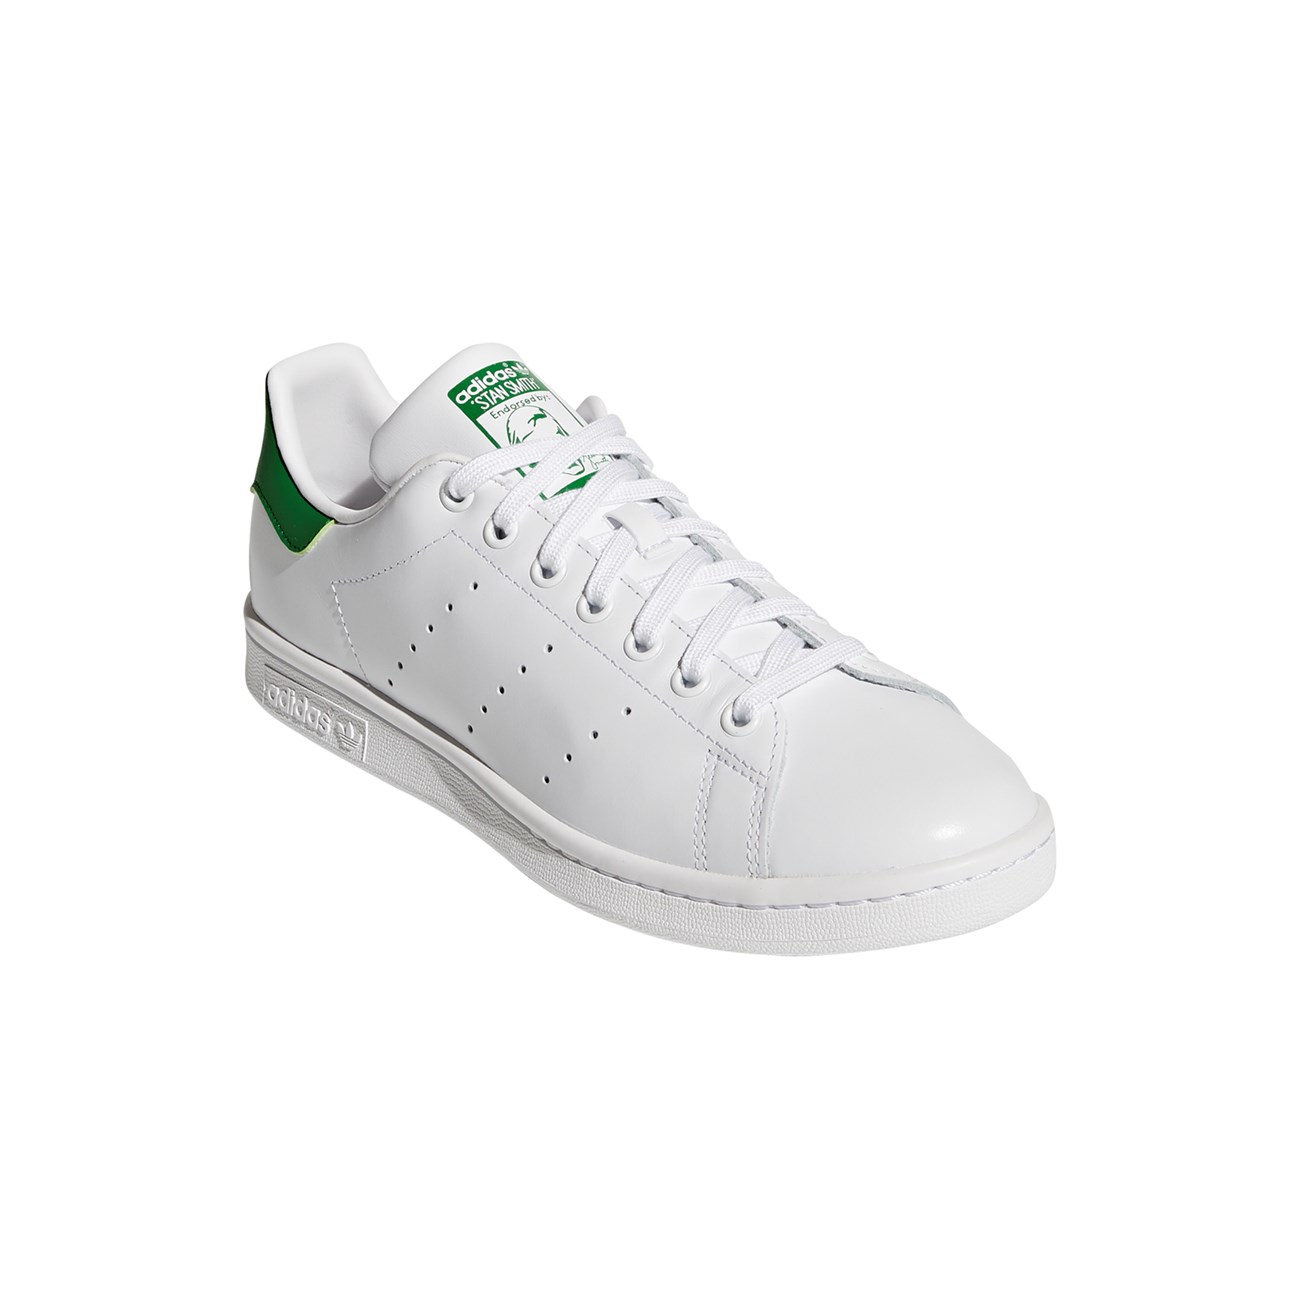 adidas Originals Unisex Sneakers Stan Smith M20324 - The Athlete's Foot